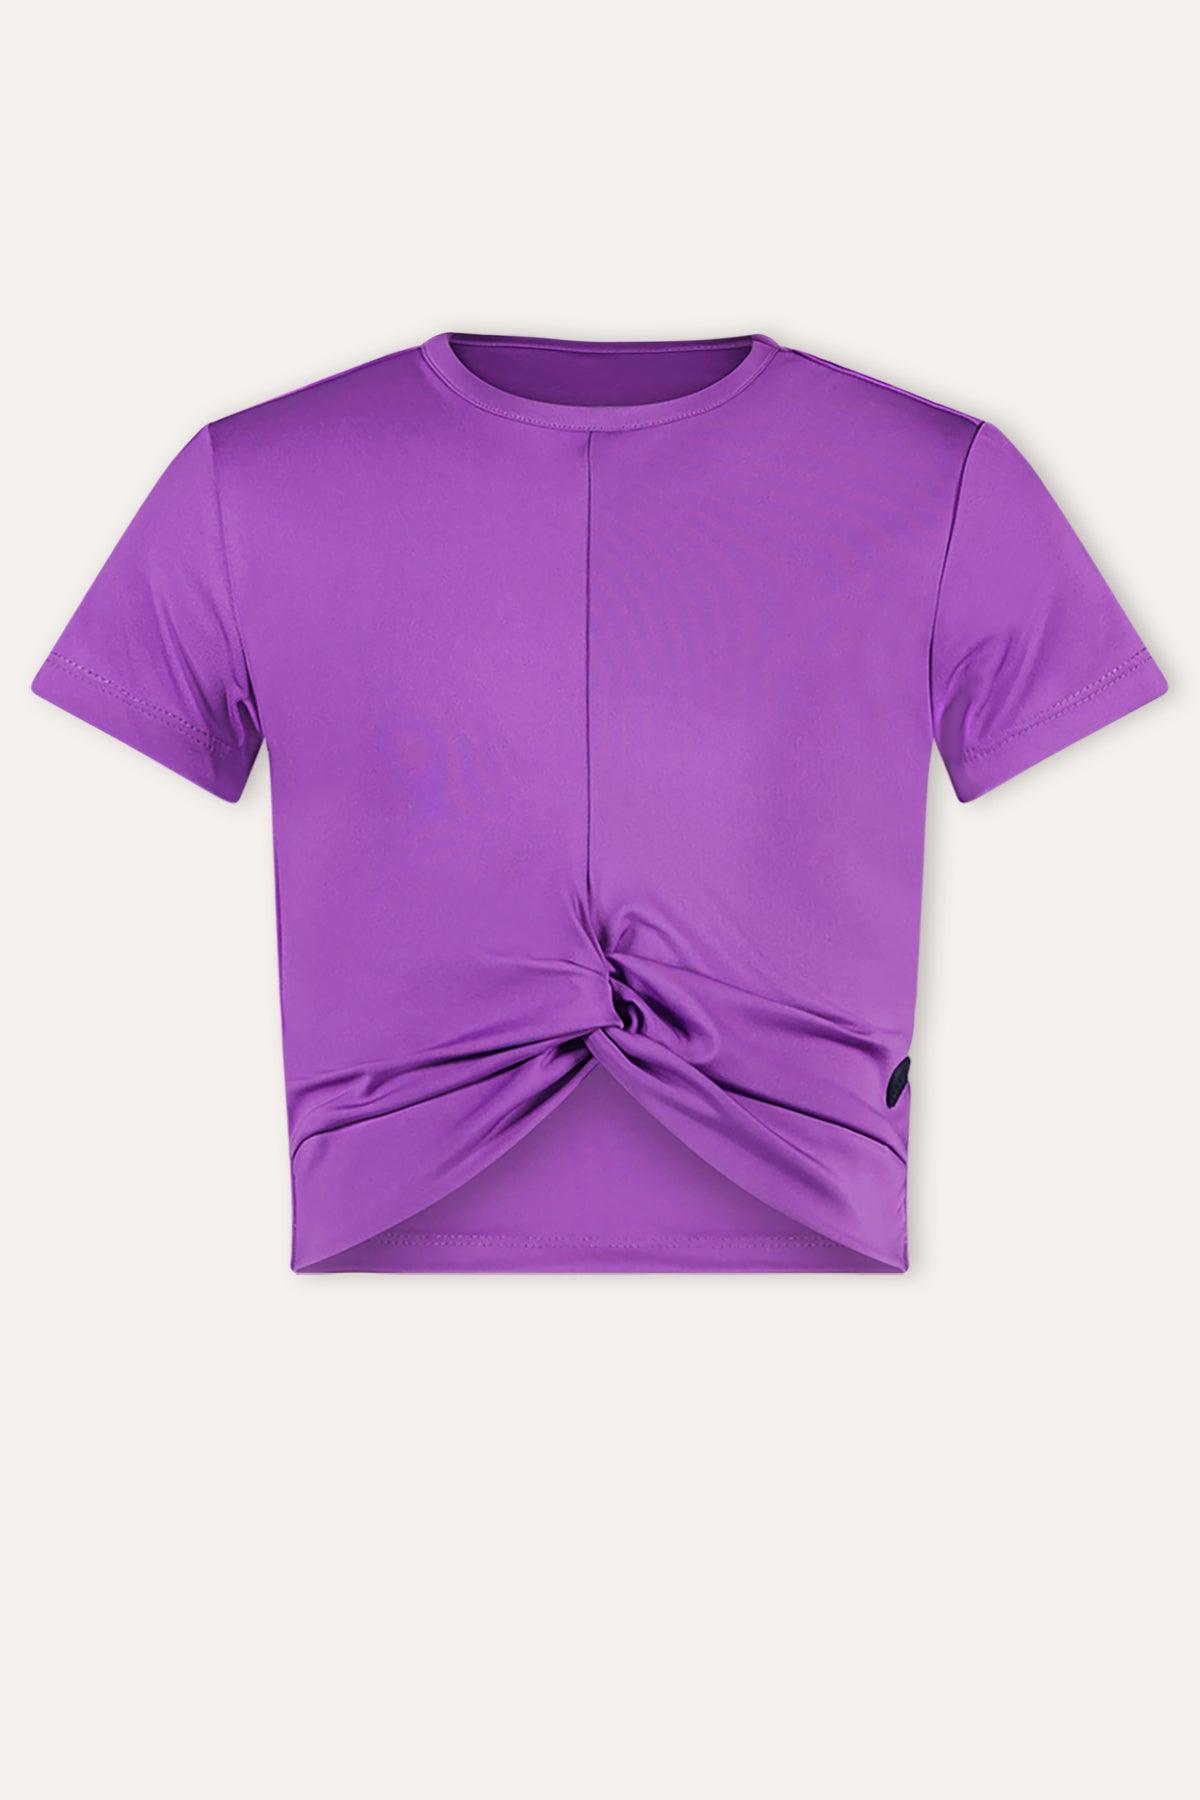 B.Nosy Anouk T-shirt Electric Grape - B.Nosy